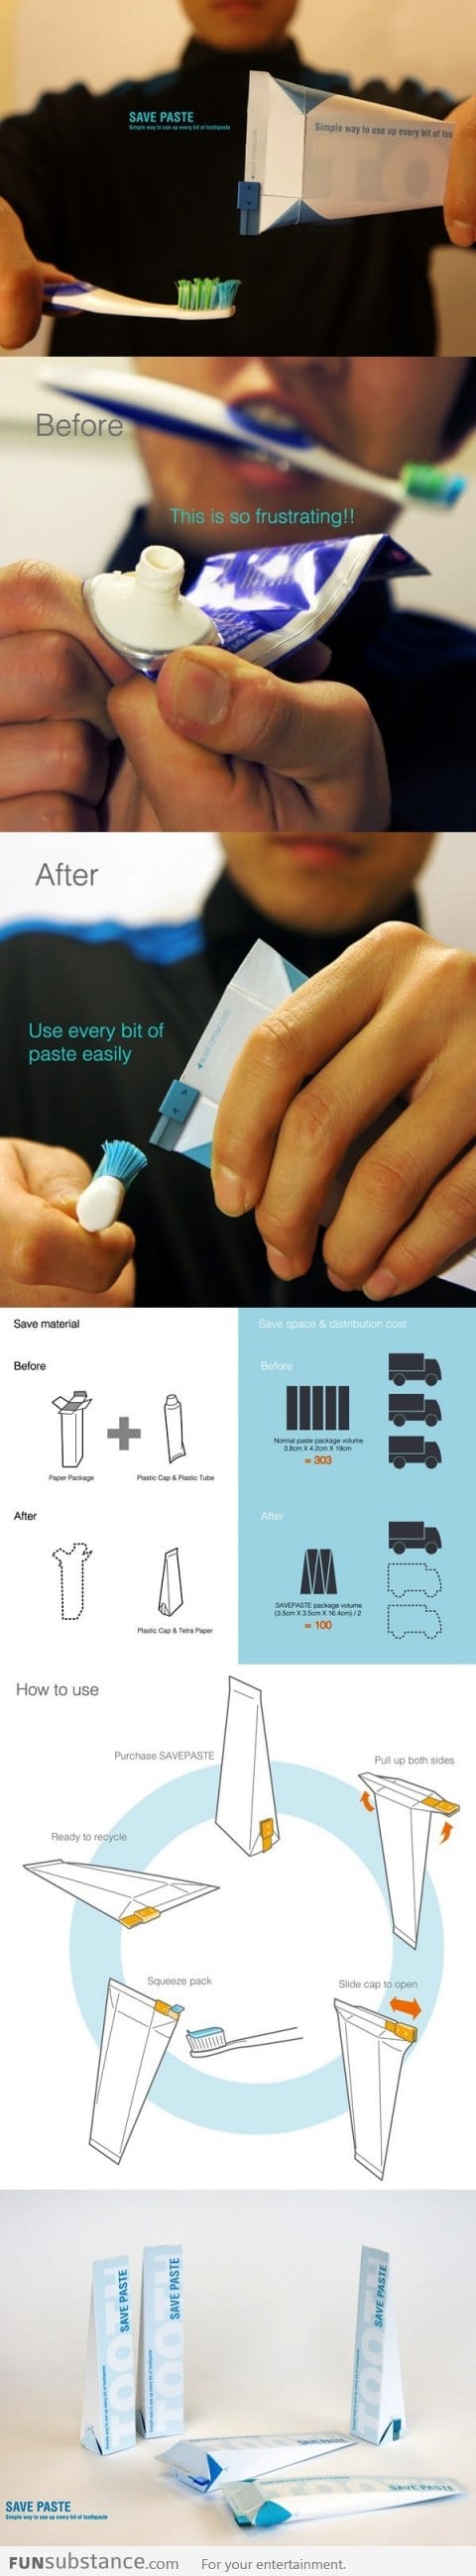 SavePaste - Toothpaste redesigned